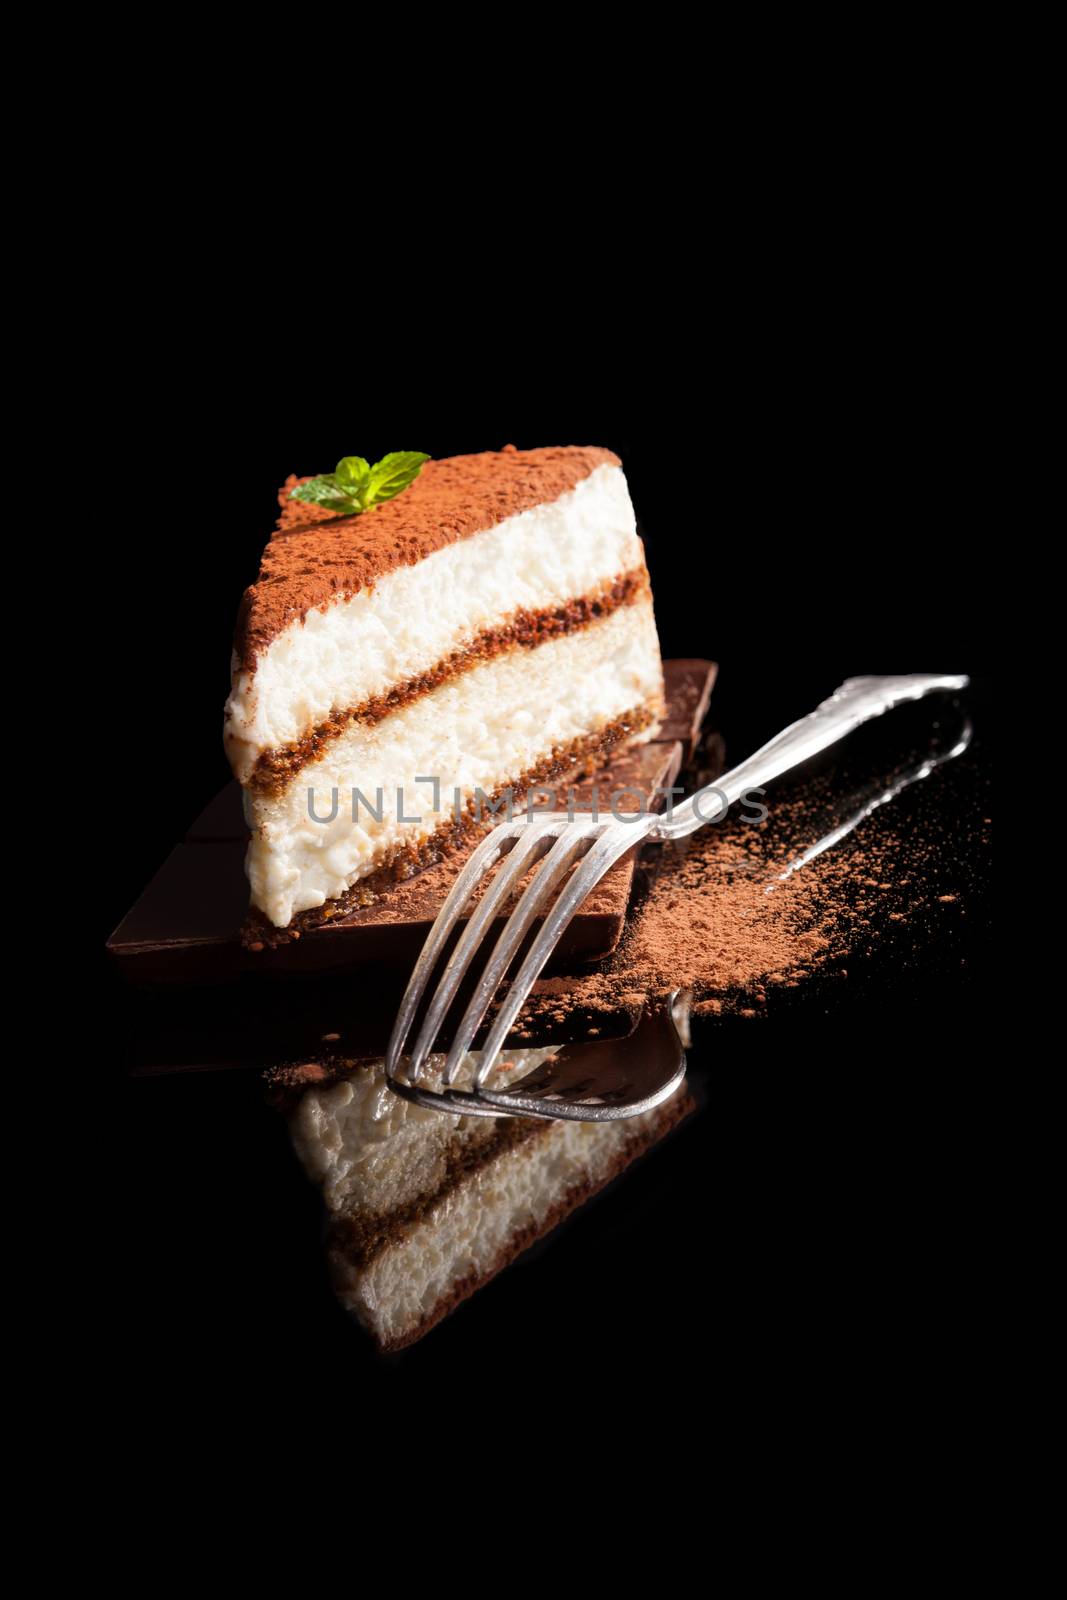 Tiramisu dessert on chocolate bar isolated on black background with silver fork. Italian sweet dessert concept.